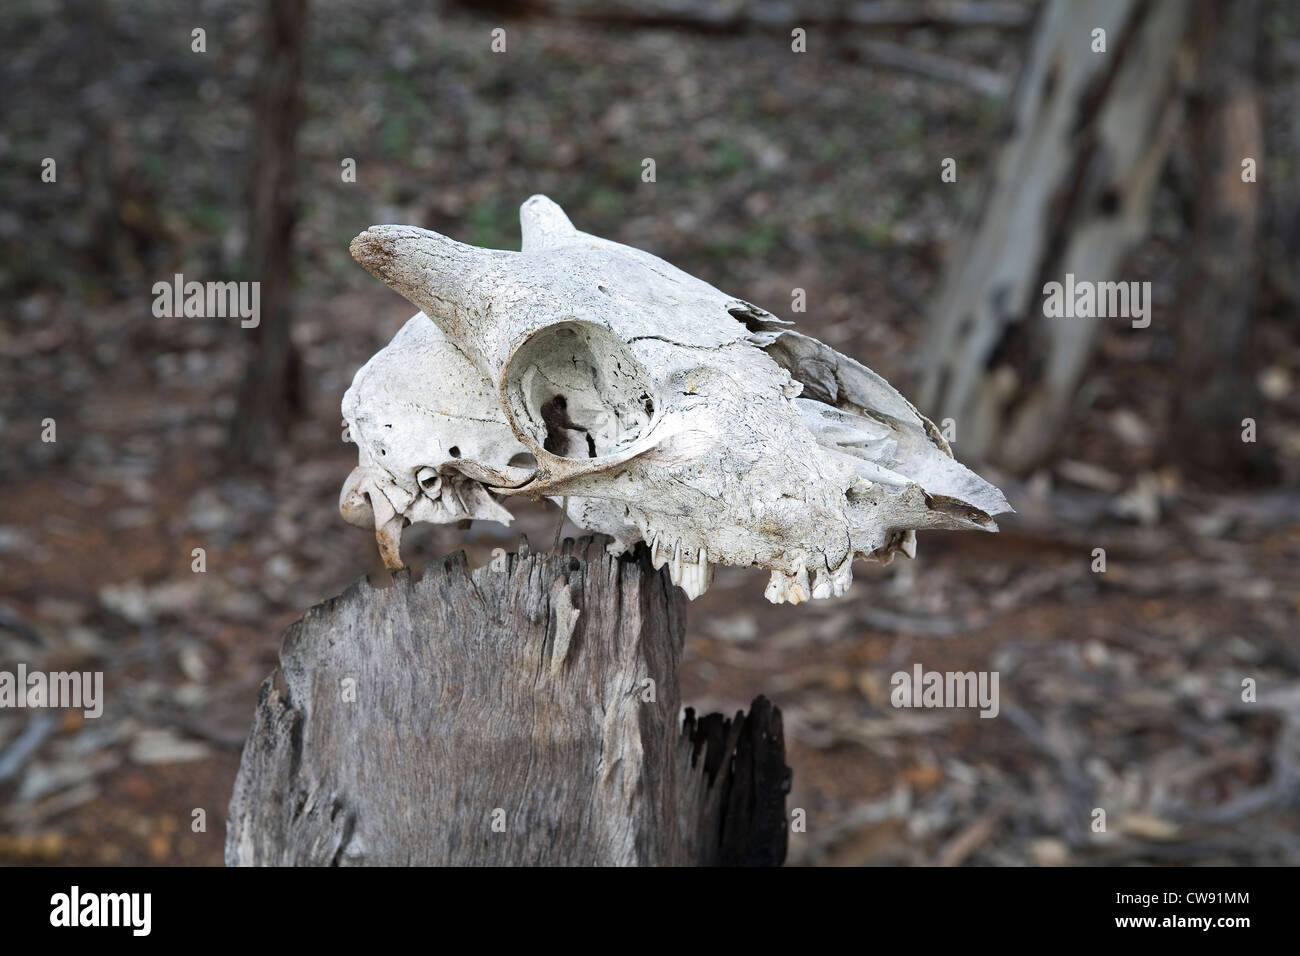 Macho o carnero ovejas cráneo encaramado a un poste de madera podrida. Foto de stock